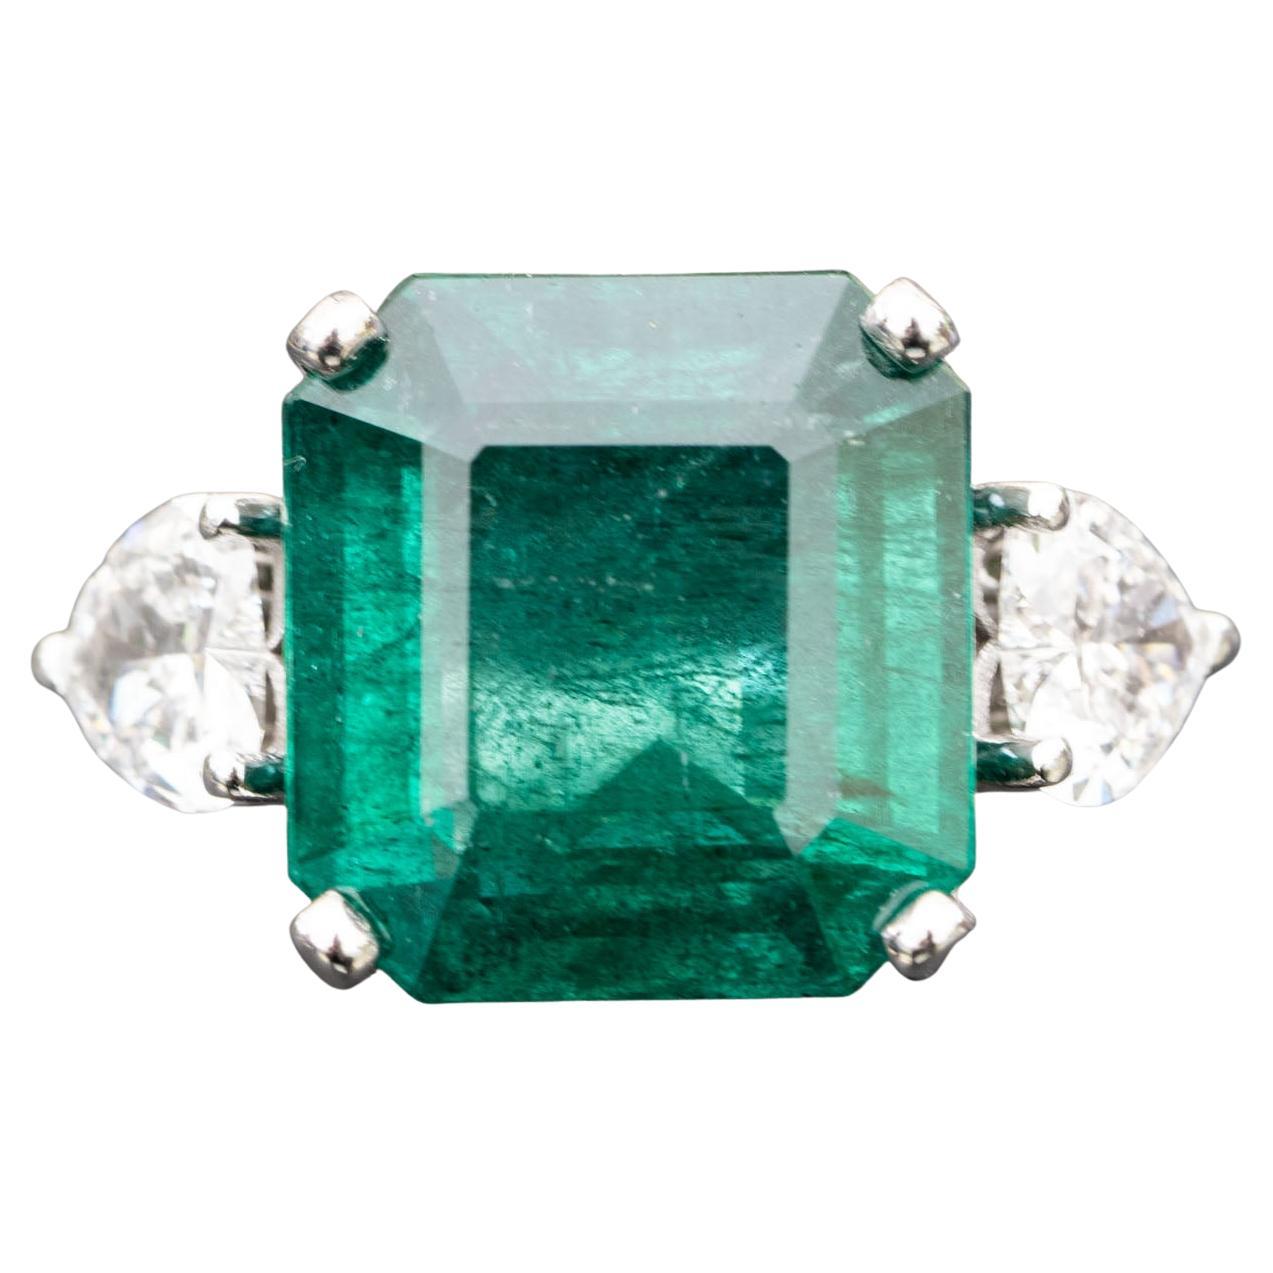 5.10 Carat Natural Emerald Engagement Ring, 0.65 Carat Natural Diamonds For Sale